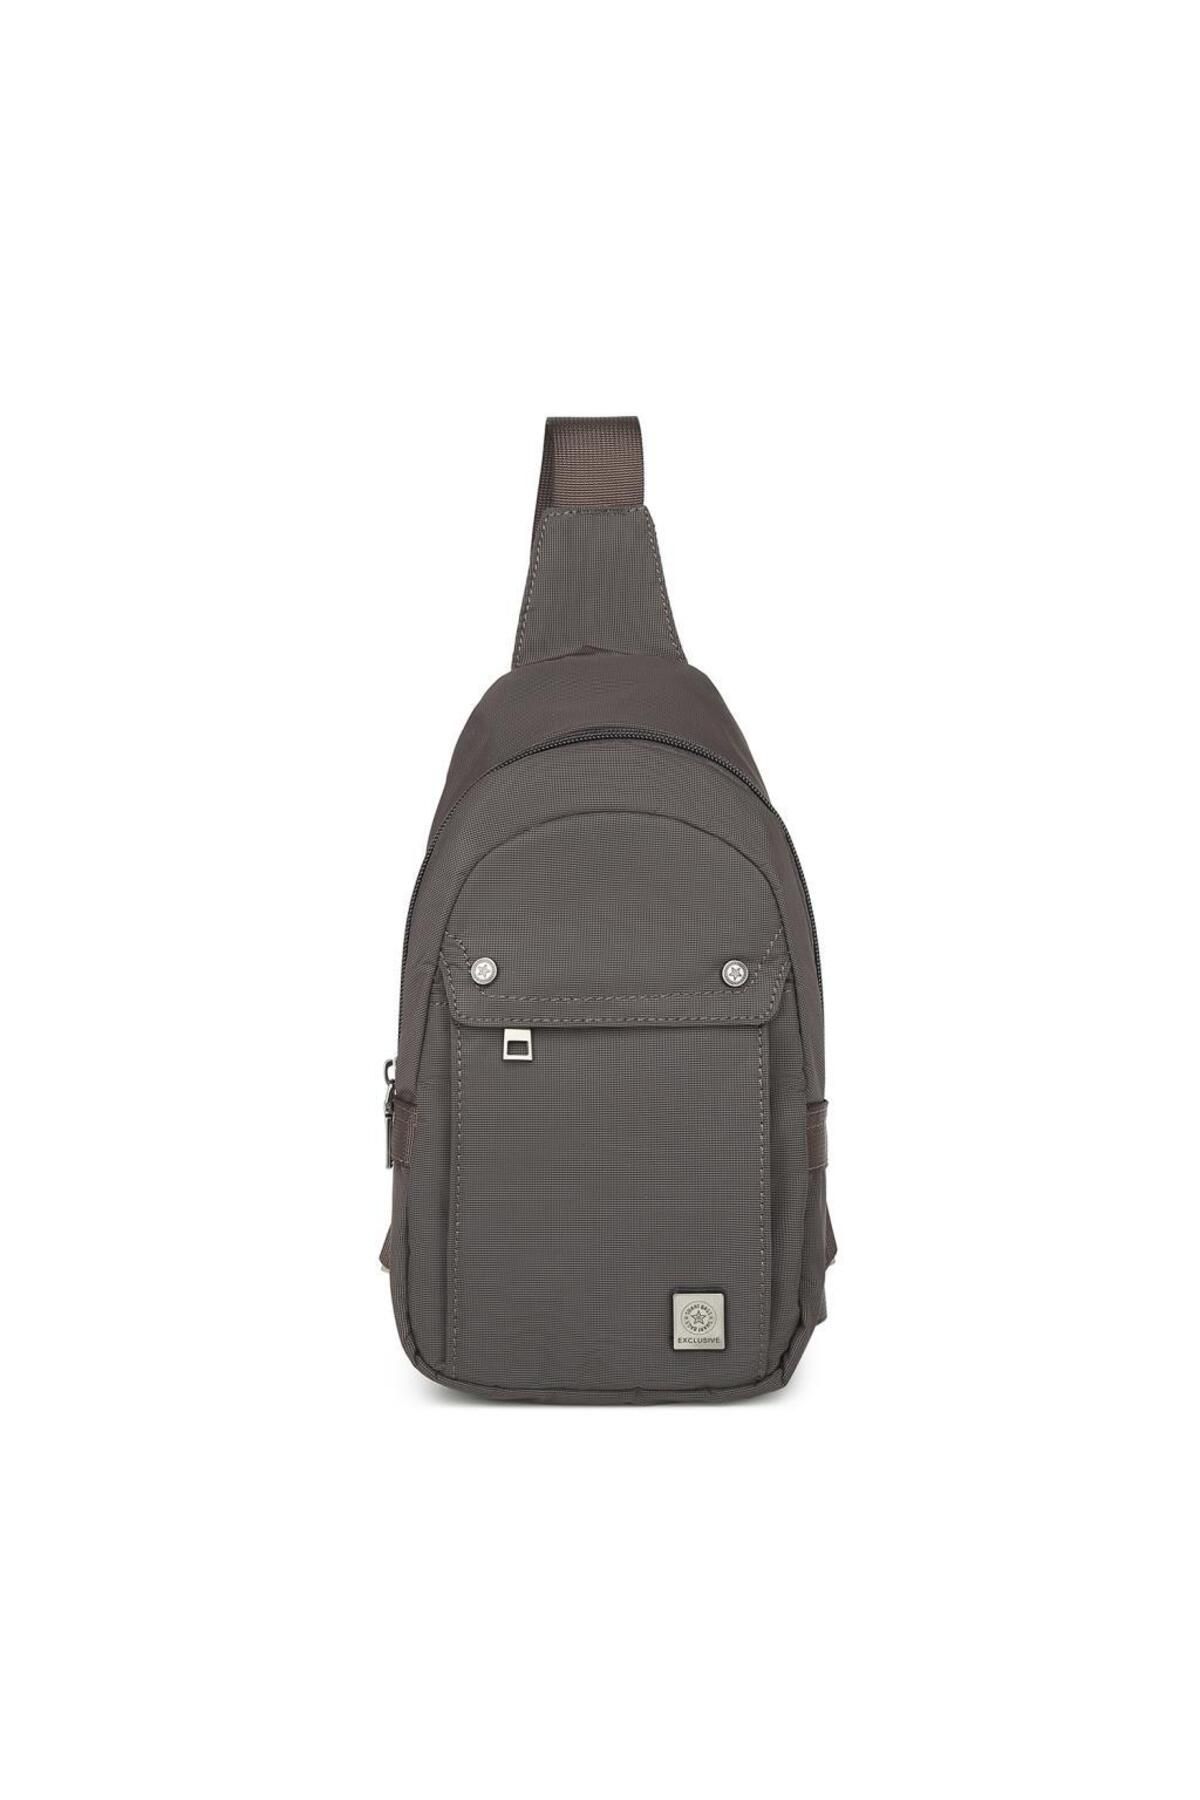 Smart Bags Exclusive Serisi Uniseks Bodybag Omuz Çantası Smart Bags 8709